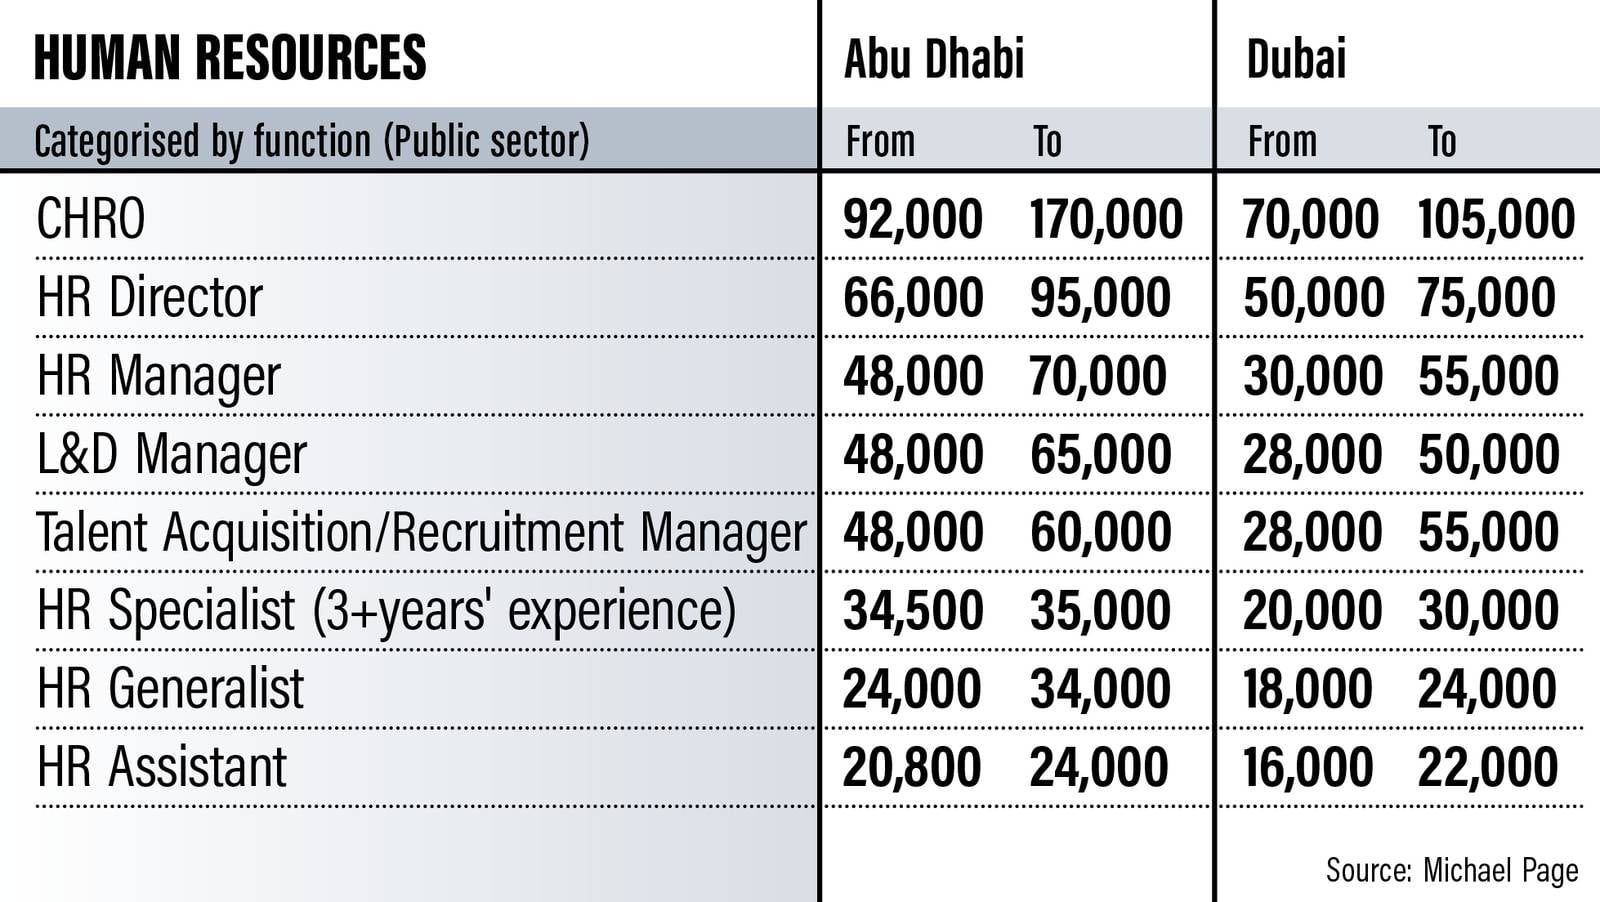 UAE salary guide how much can Emiratis earn in Dubai and Abu Dhabi?